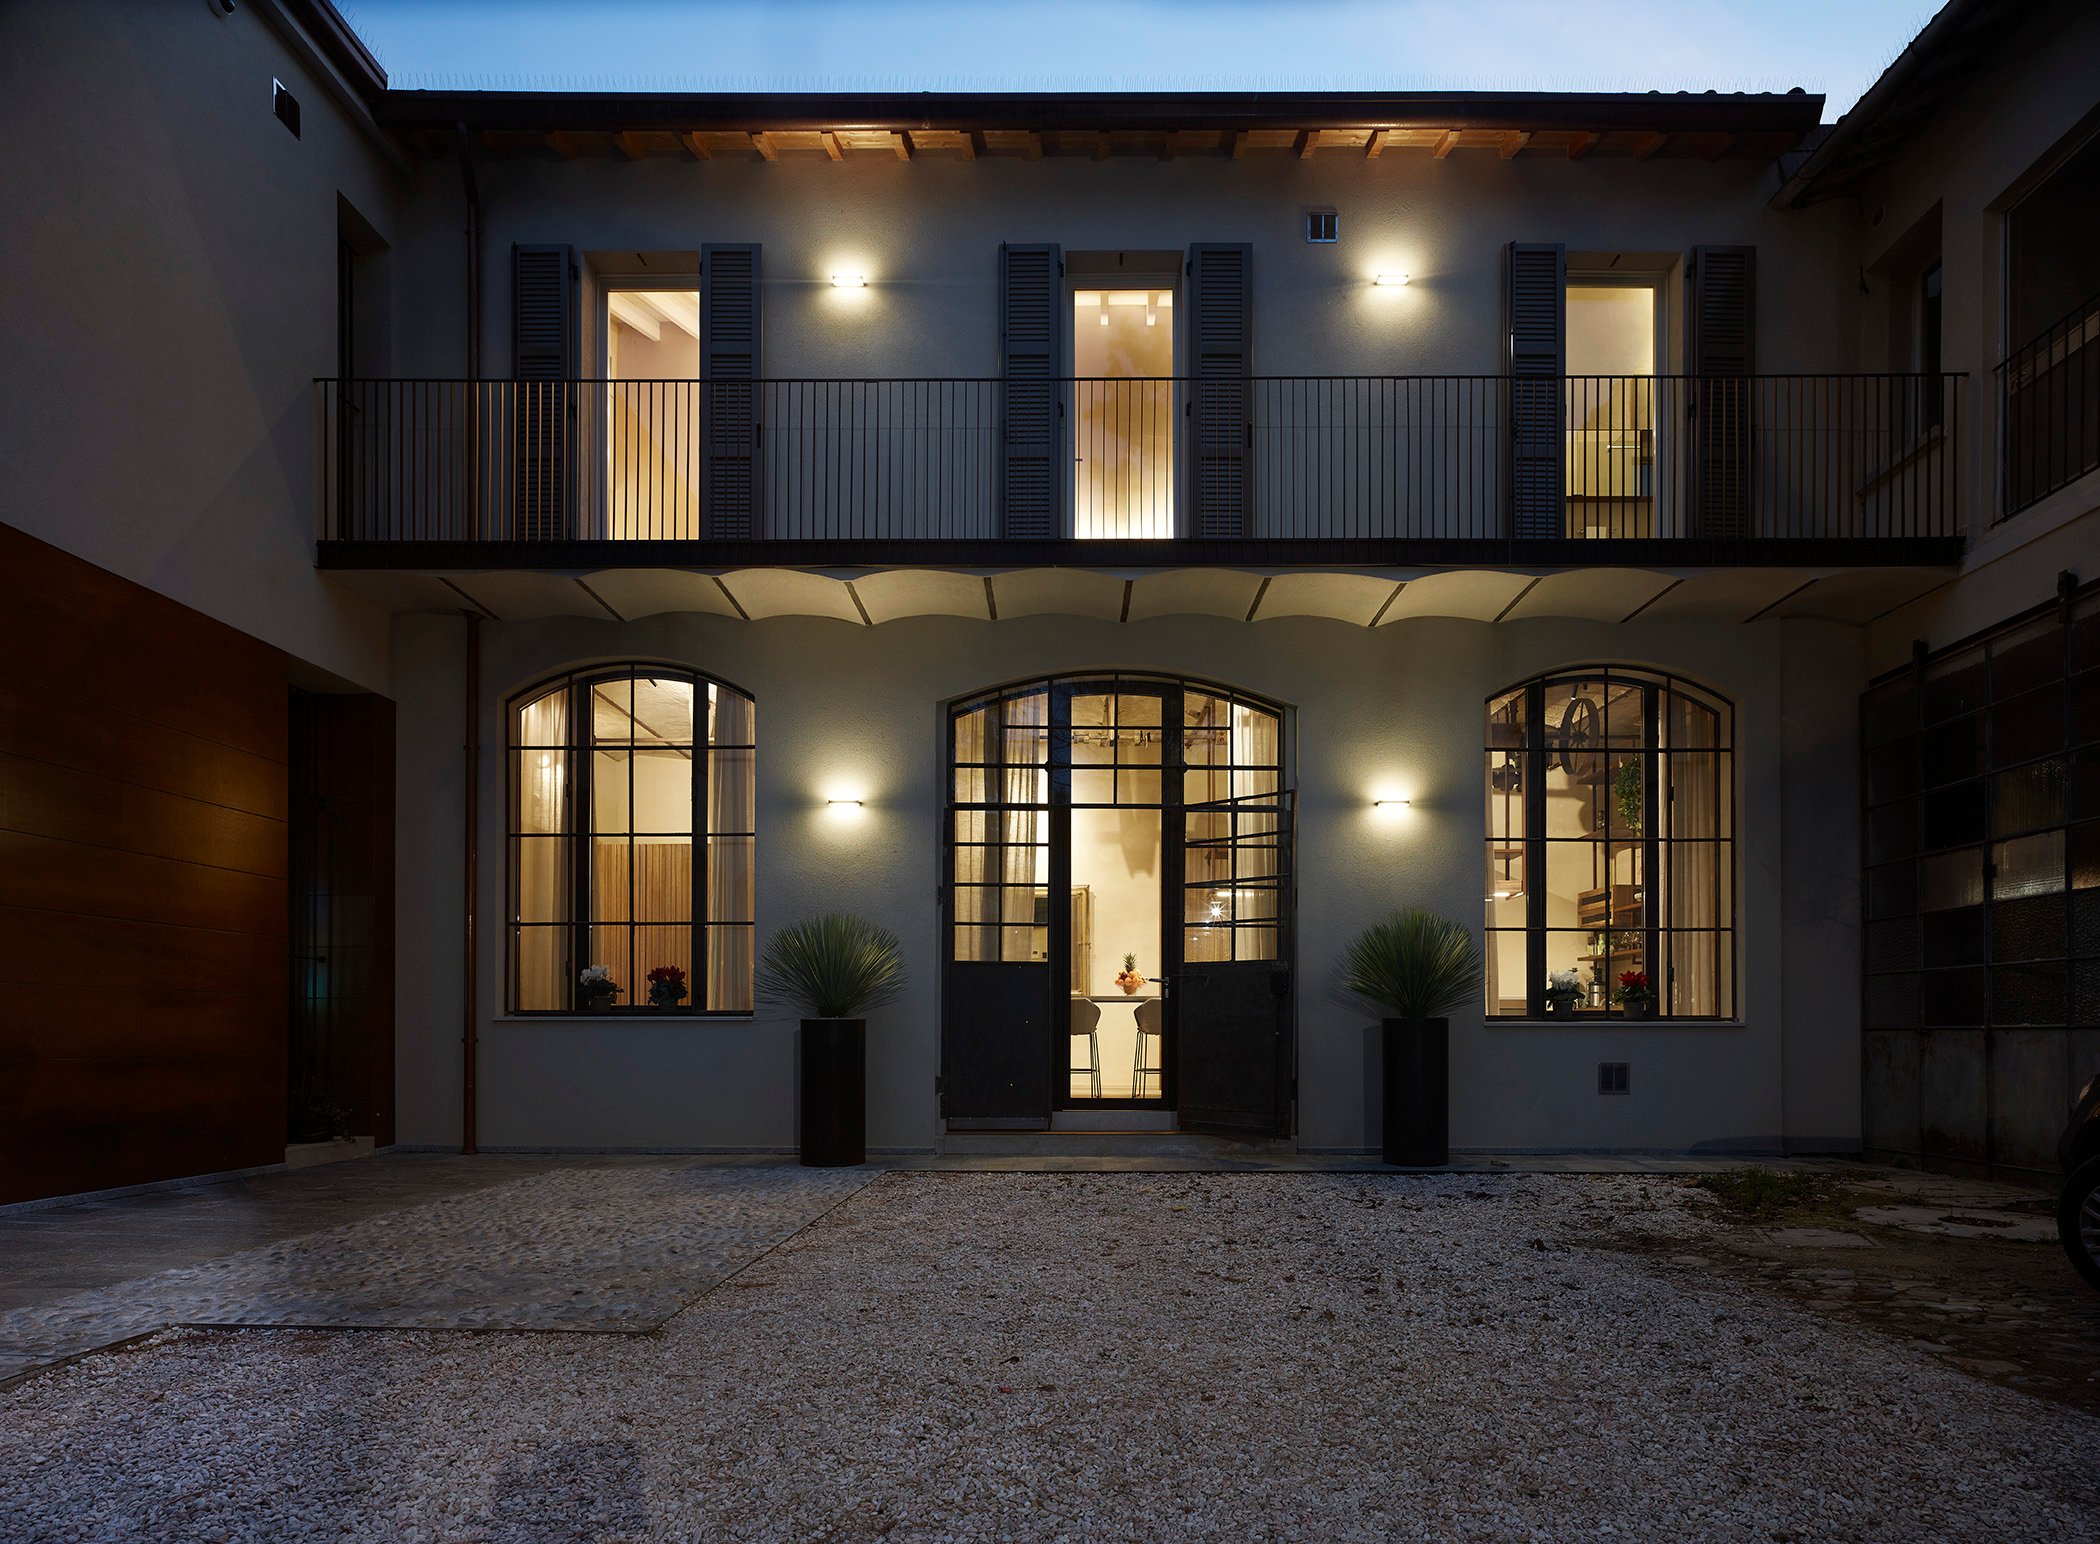 Casa Gottardi: a home with industrial elegance